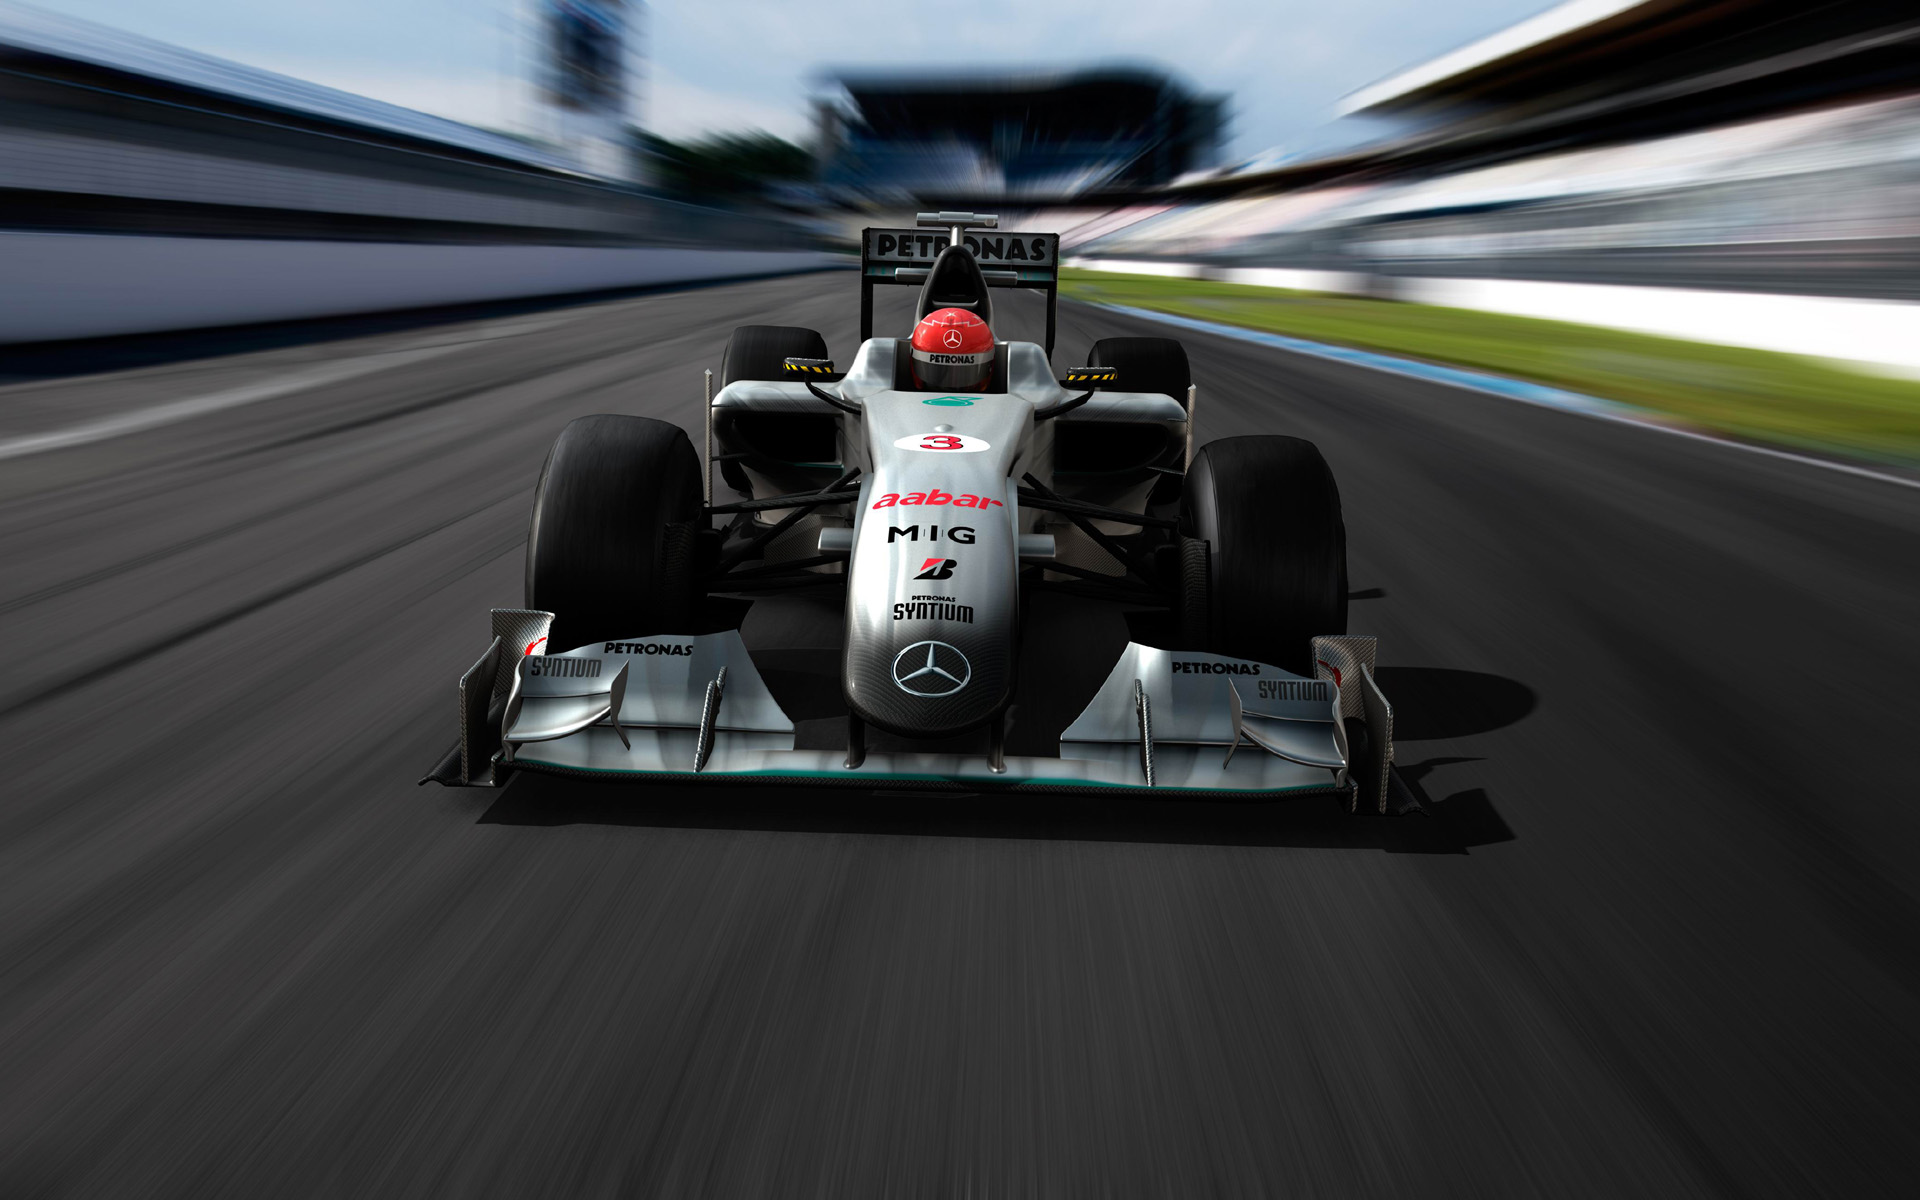 Marcedes F1 Wallpaper Full HD High Resolution